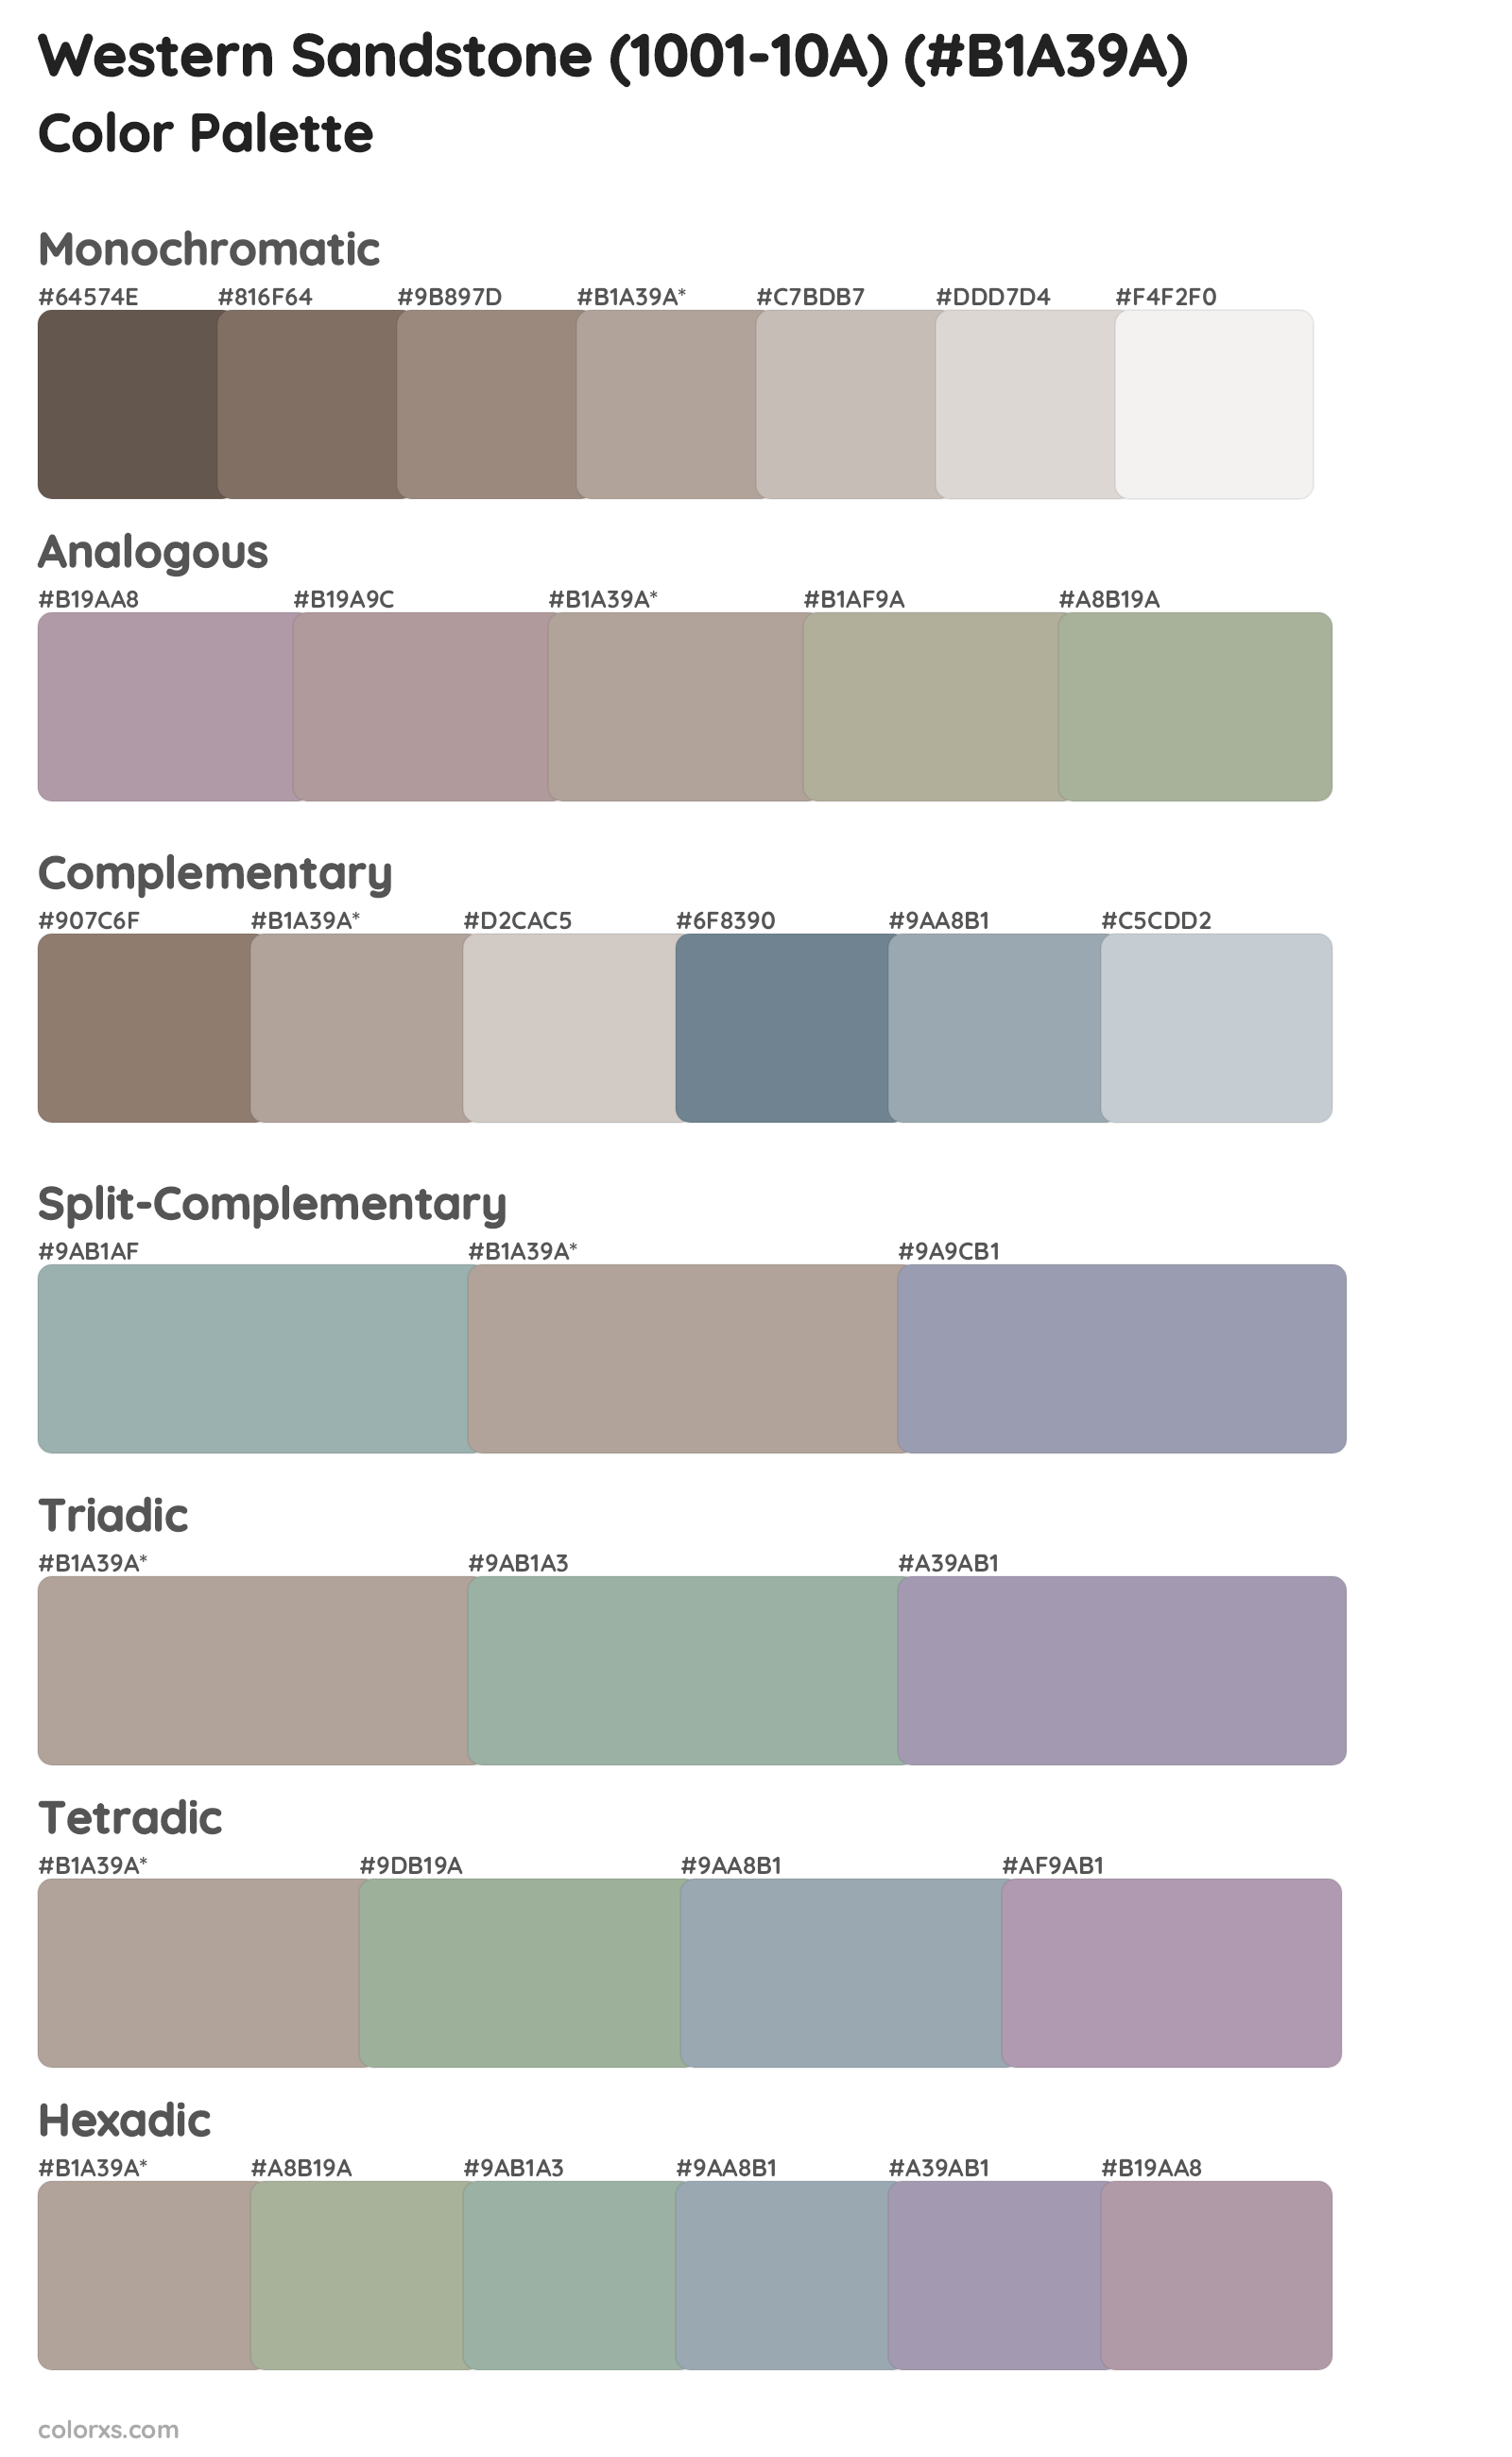 Western Sandstone (1001-10A) Color Scheme Palettes